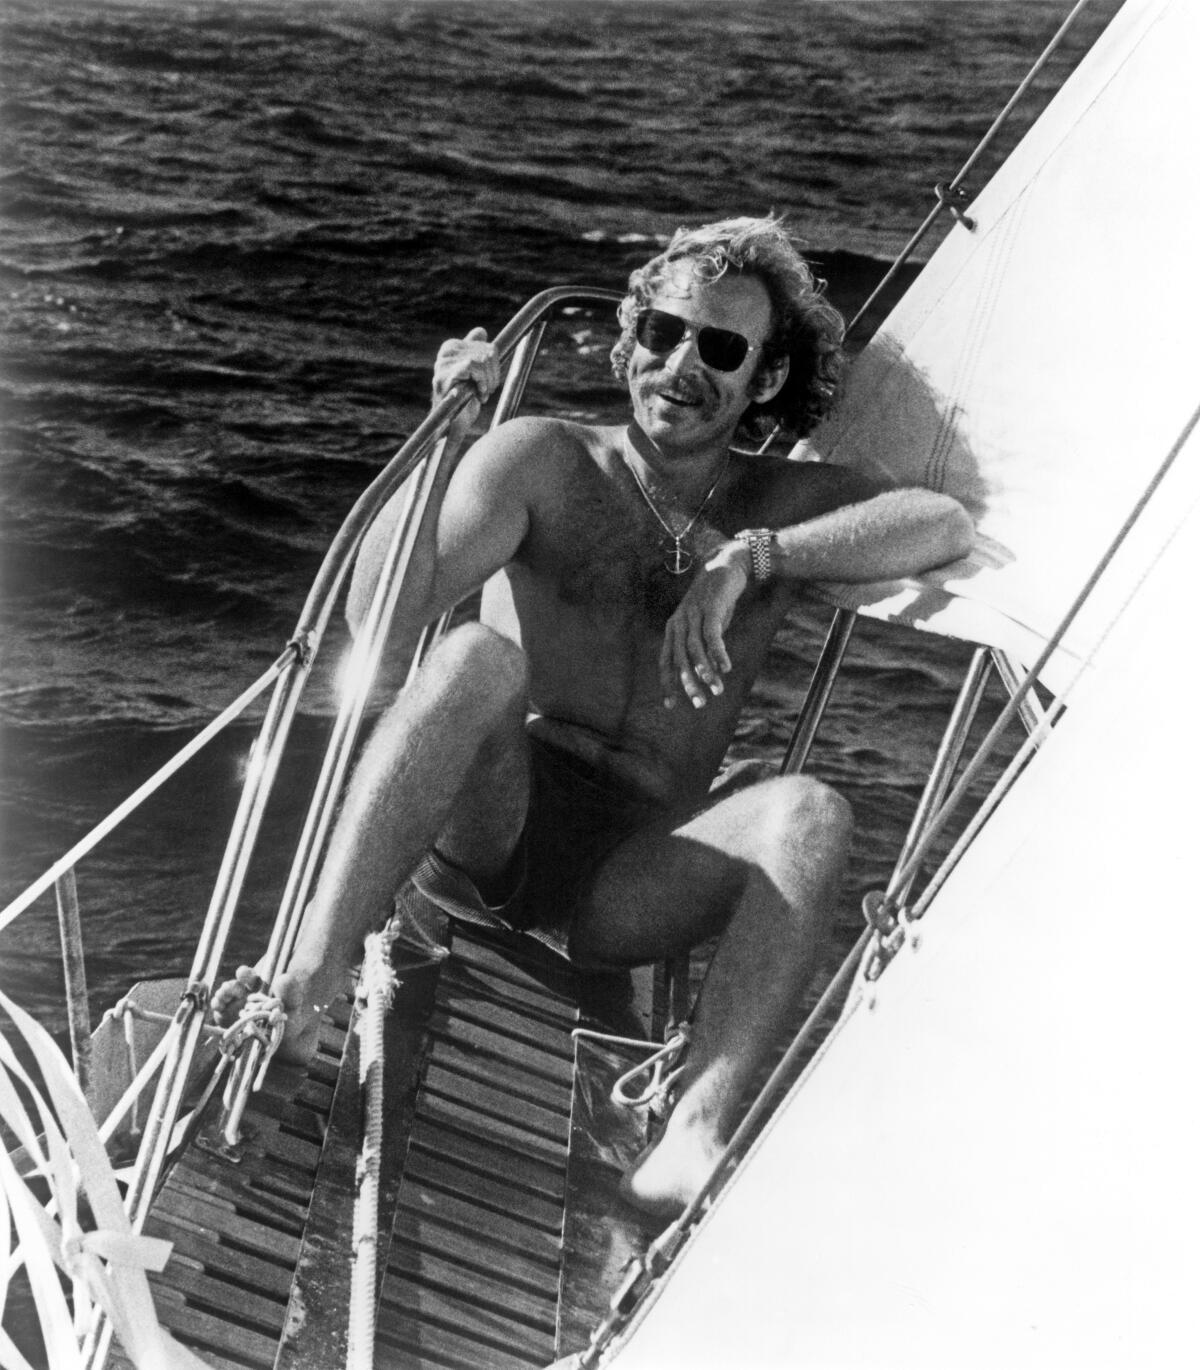 Jimmy Buffett on his sailboat.